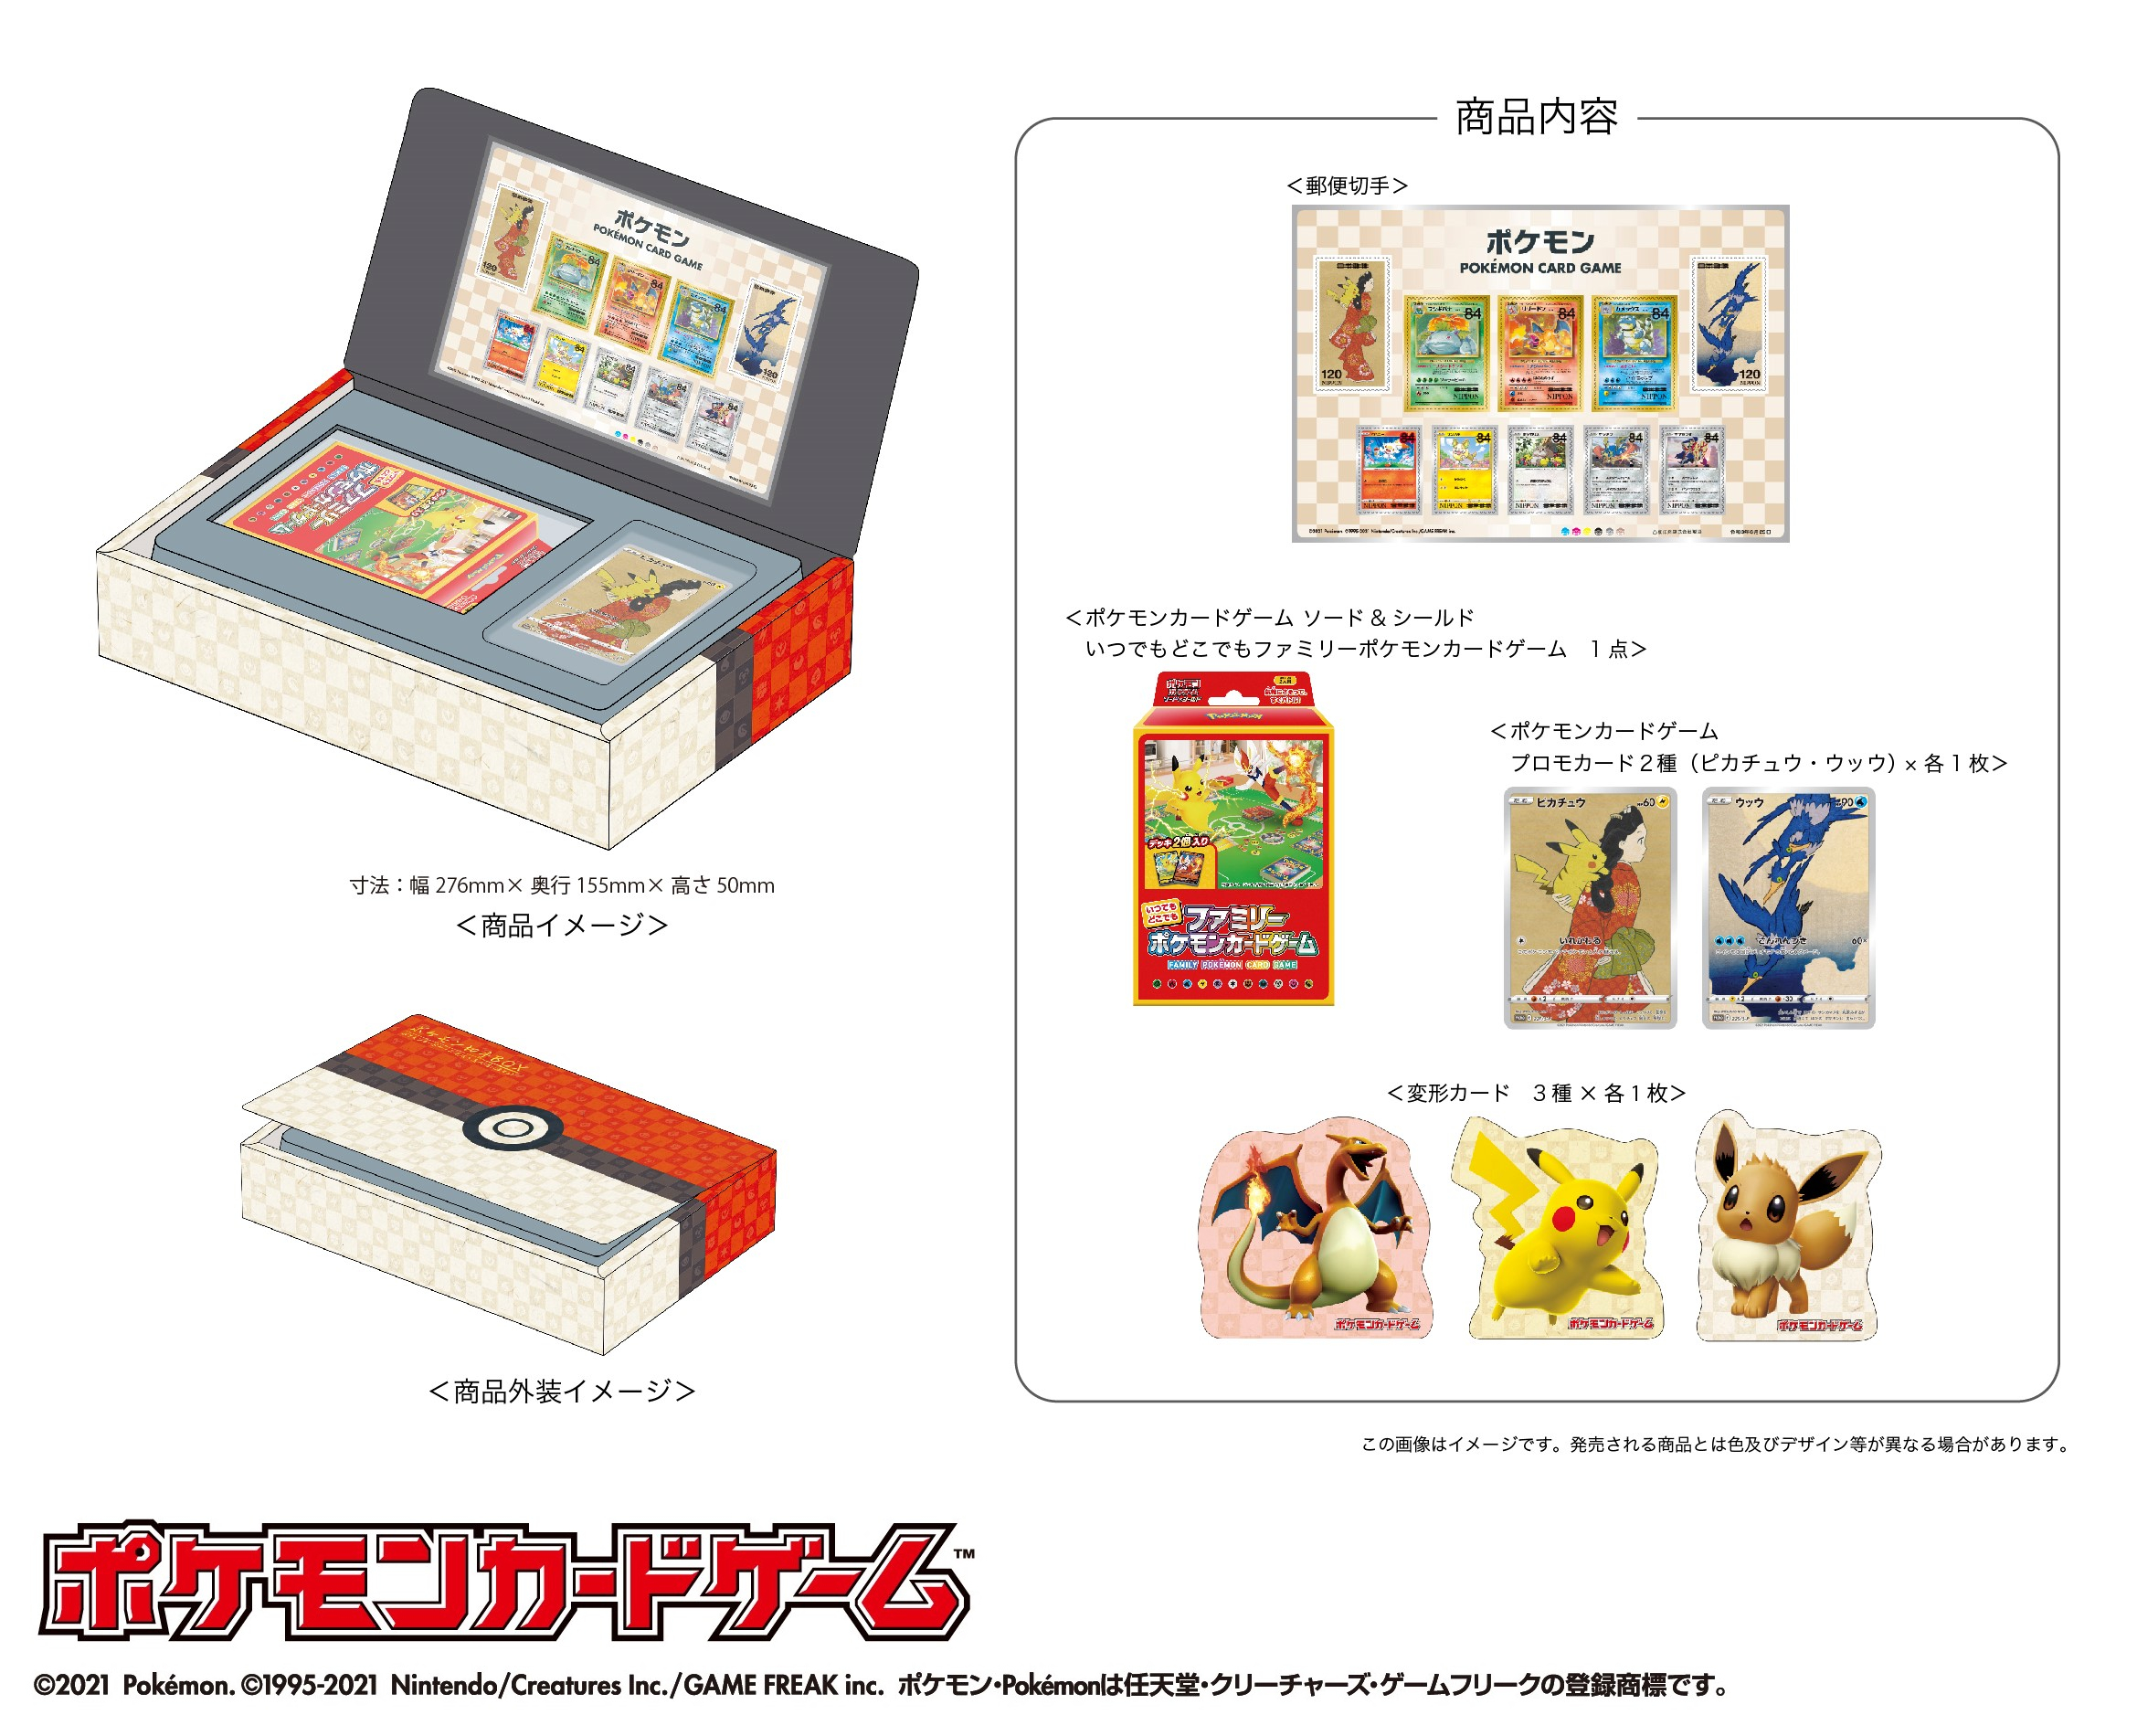 Pokémon Stamp Set card game